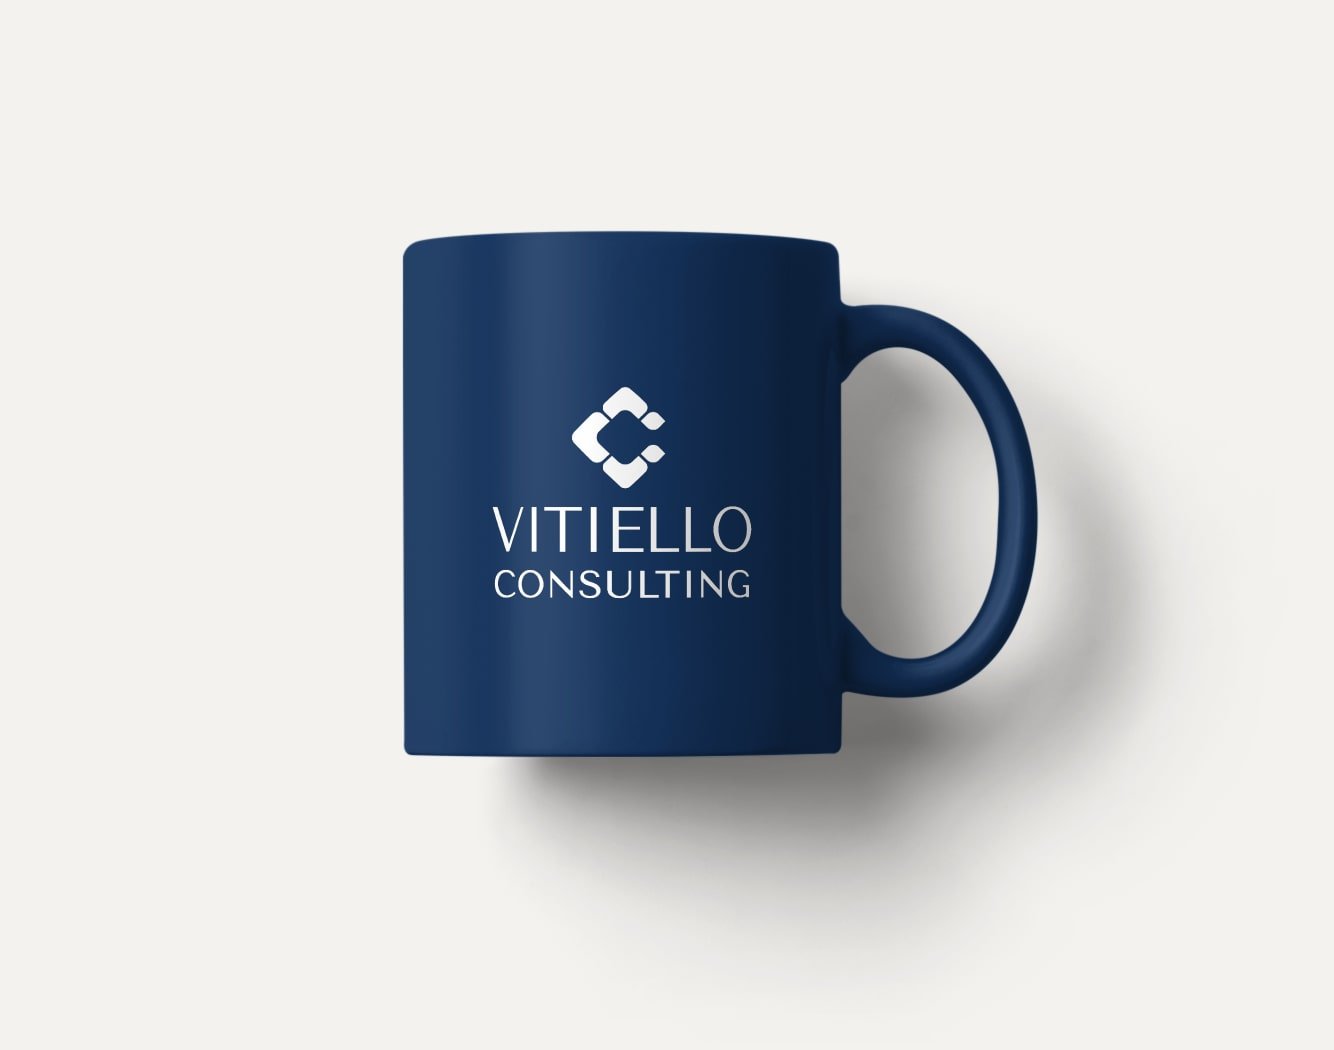 dark-blue-mug-with-abstract-corporate-logo-on-it.jpeg